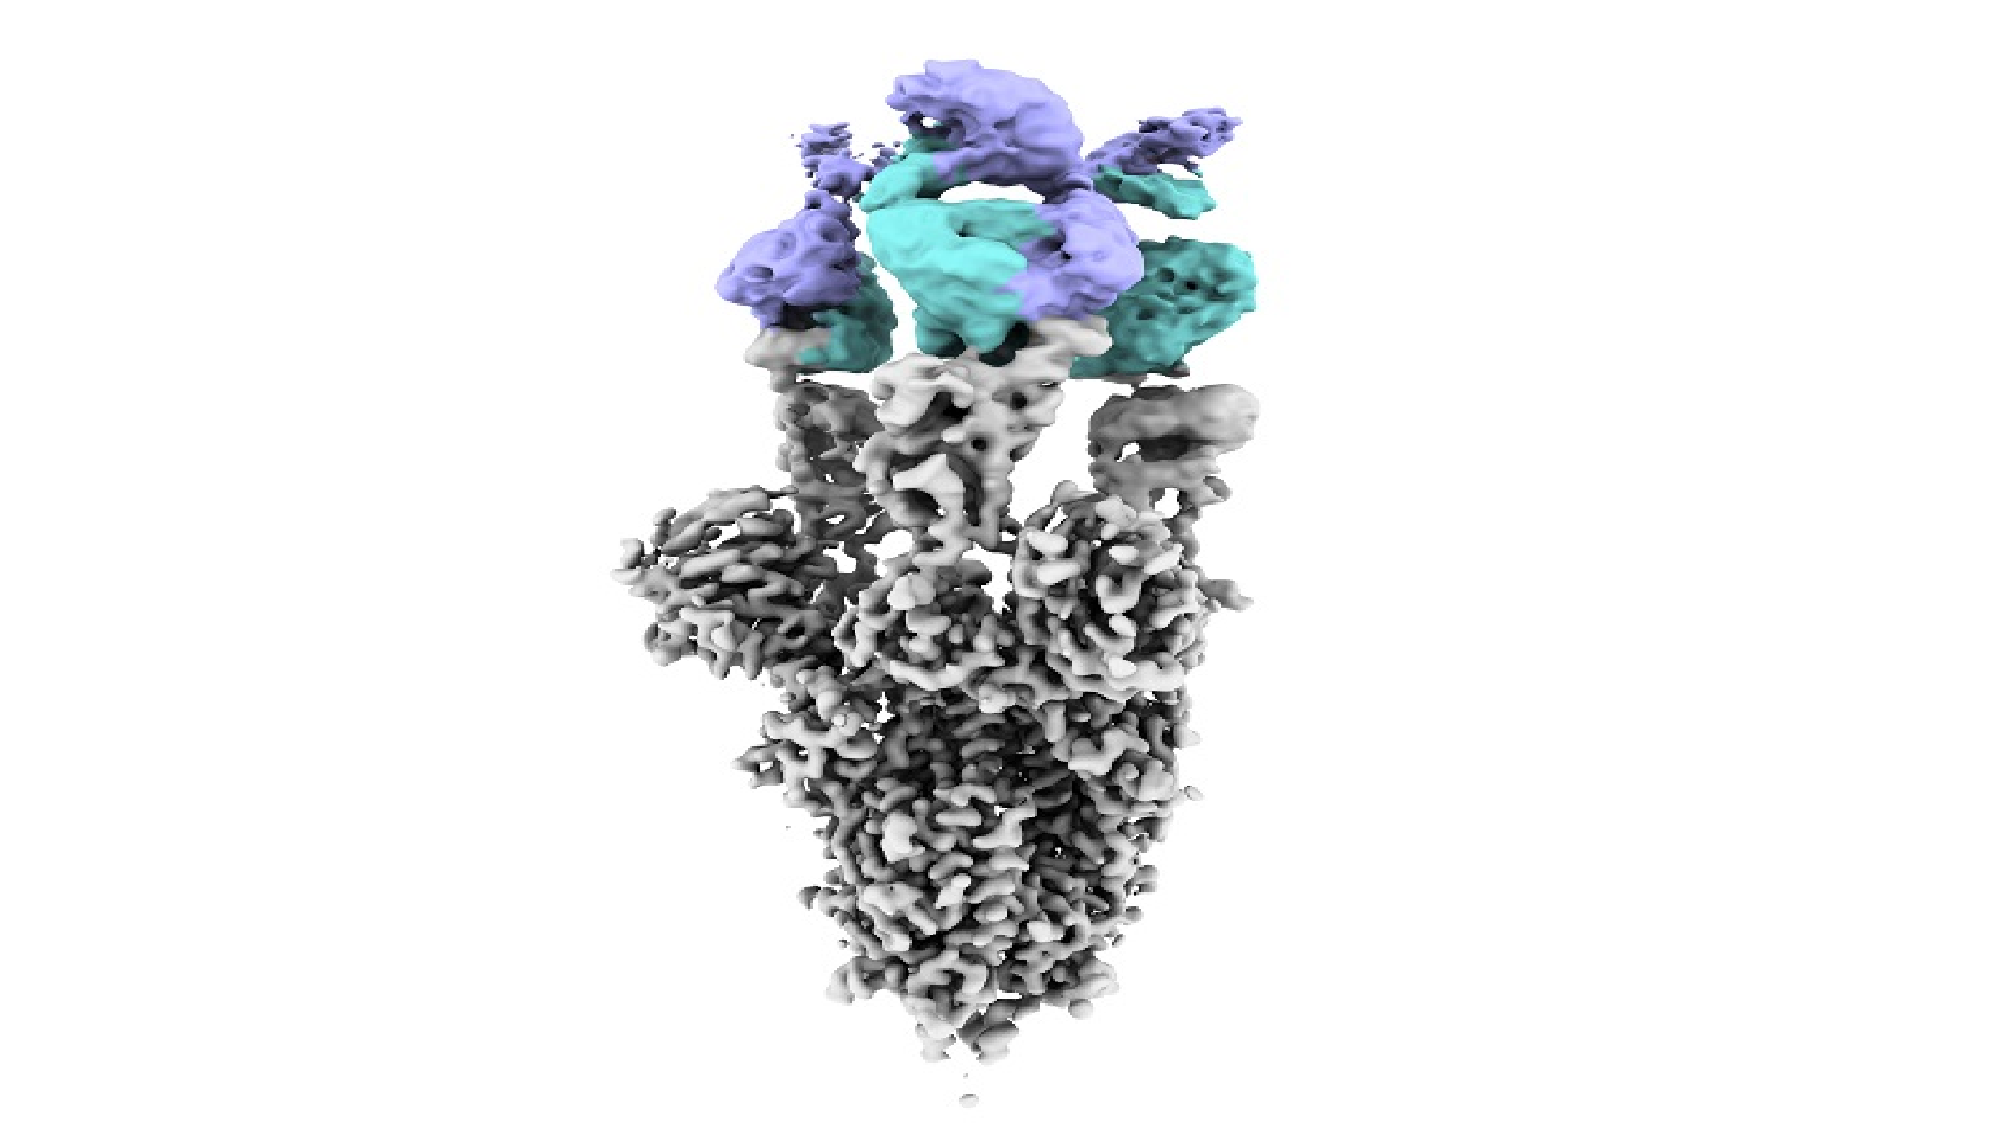 An effective antibody against all variants of SARS-CoV-2